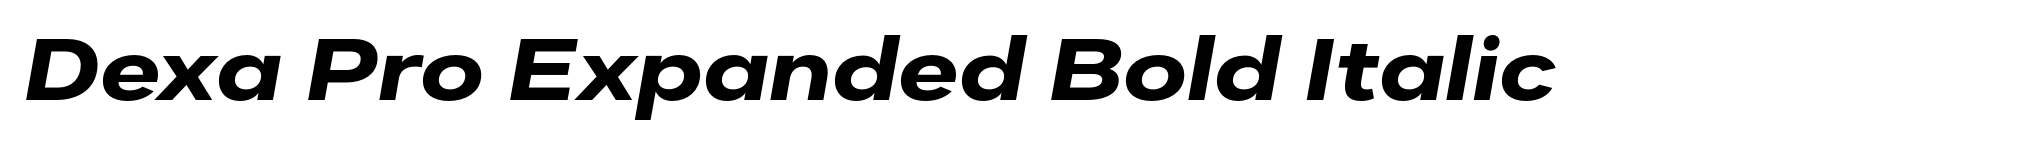 Dexa Pro Expanded Bold Italic image